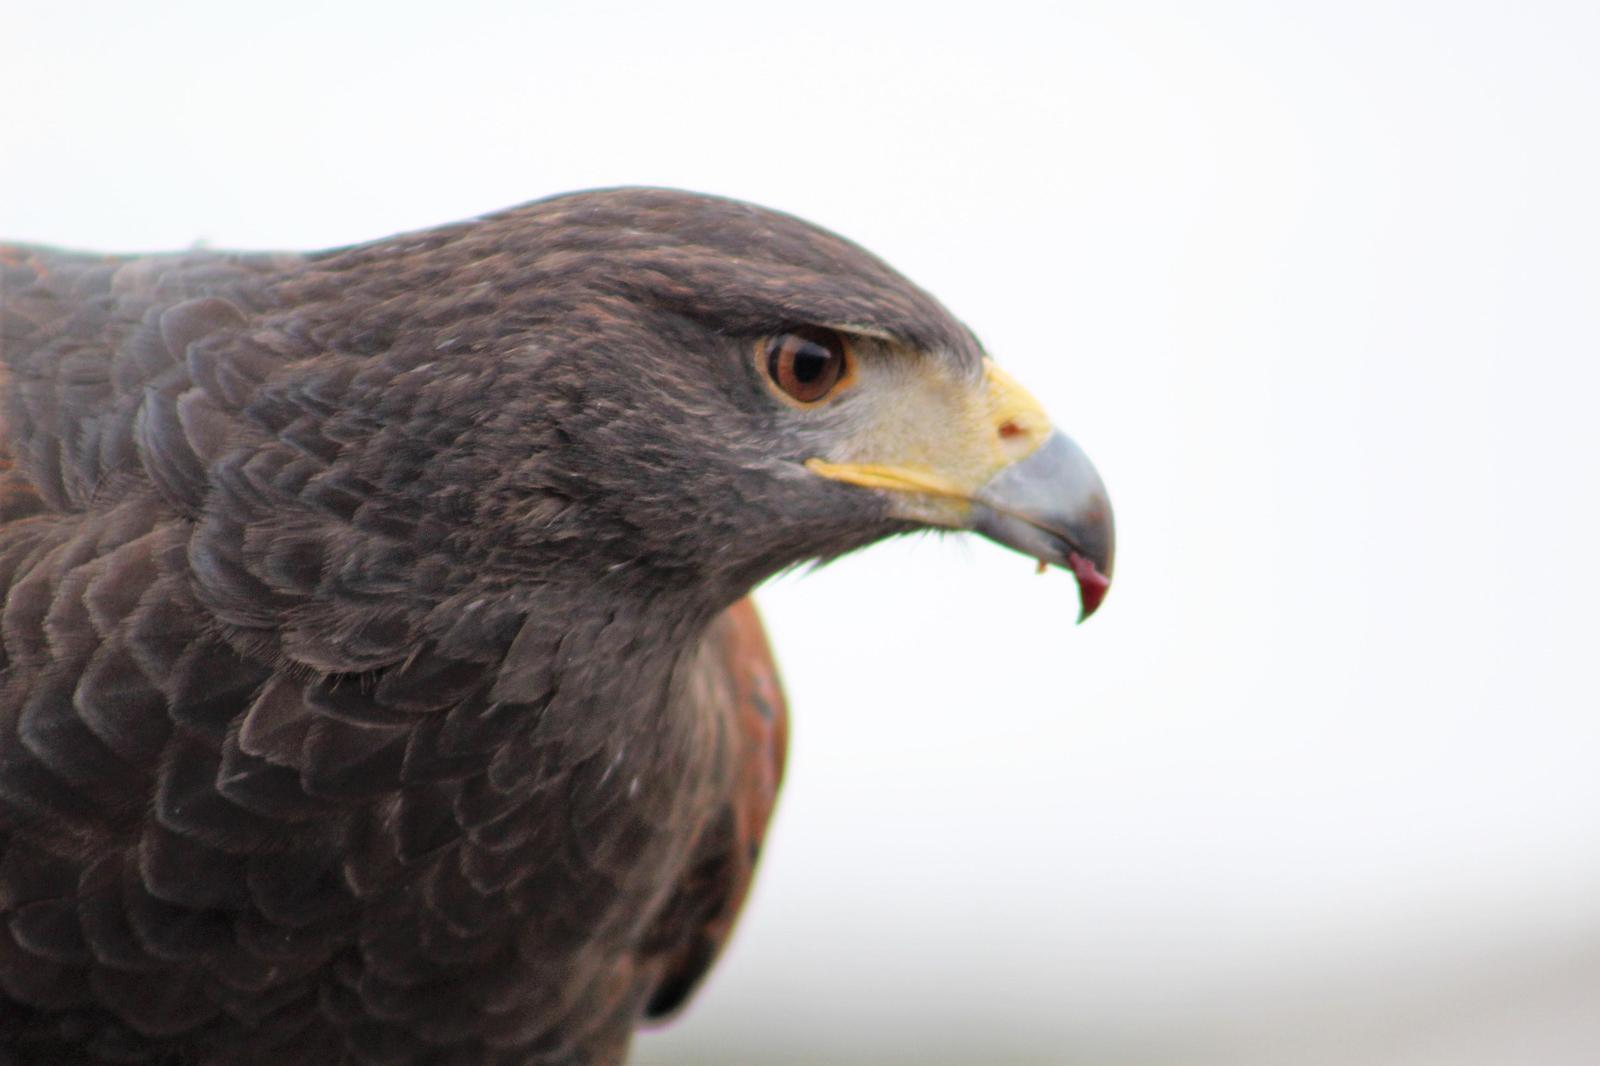 Harris's Hawk Photo by Tony Heindel